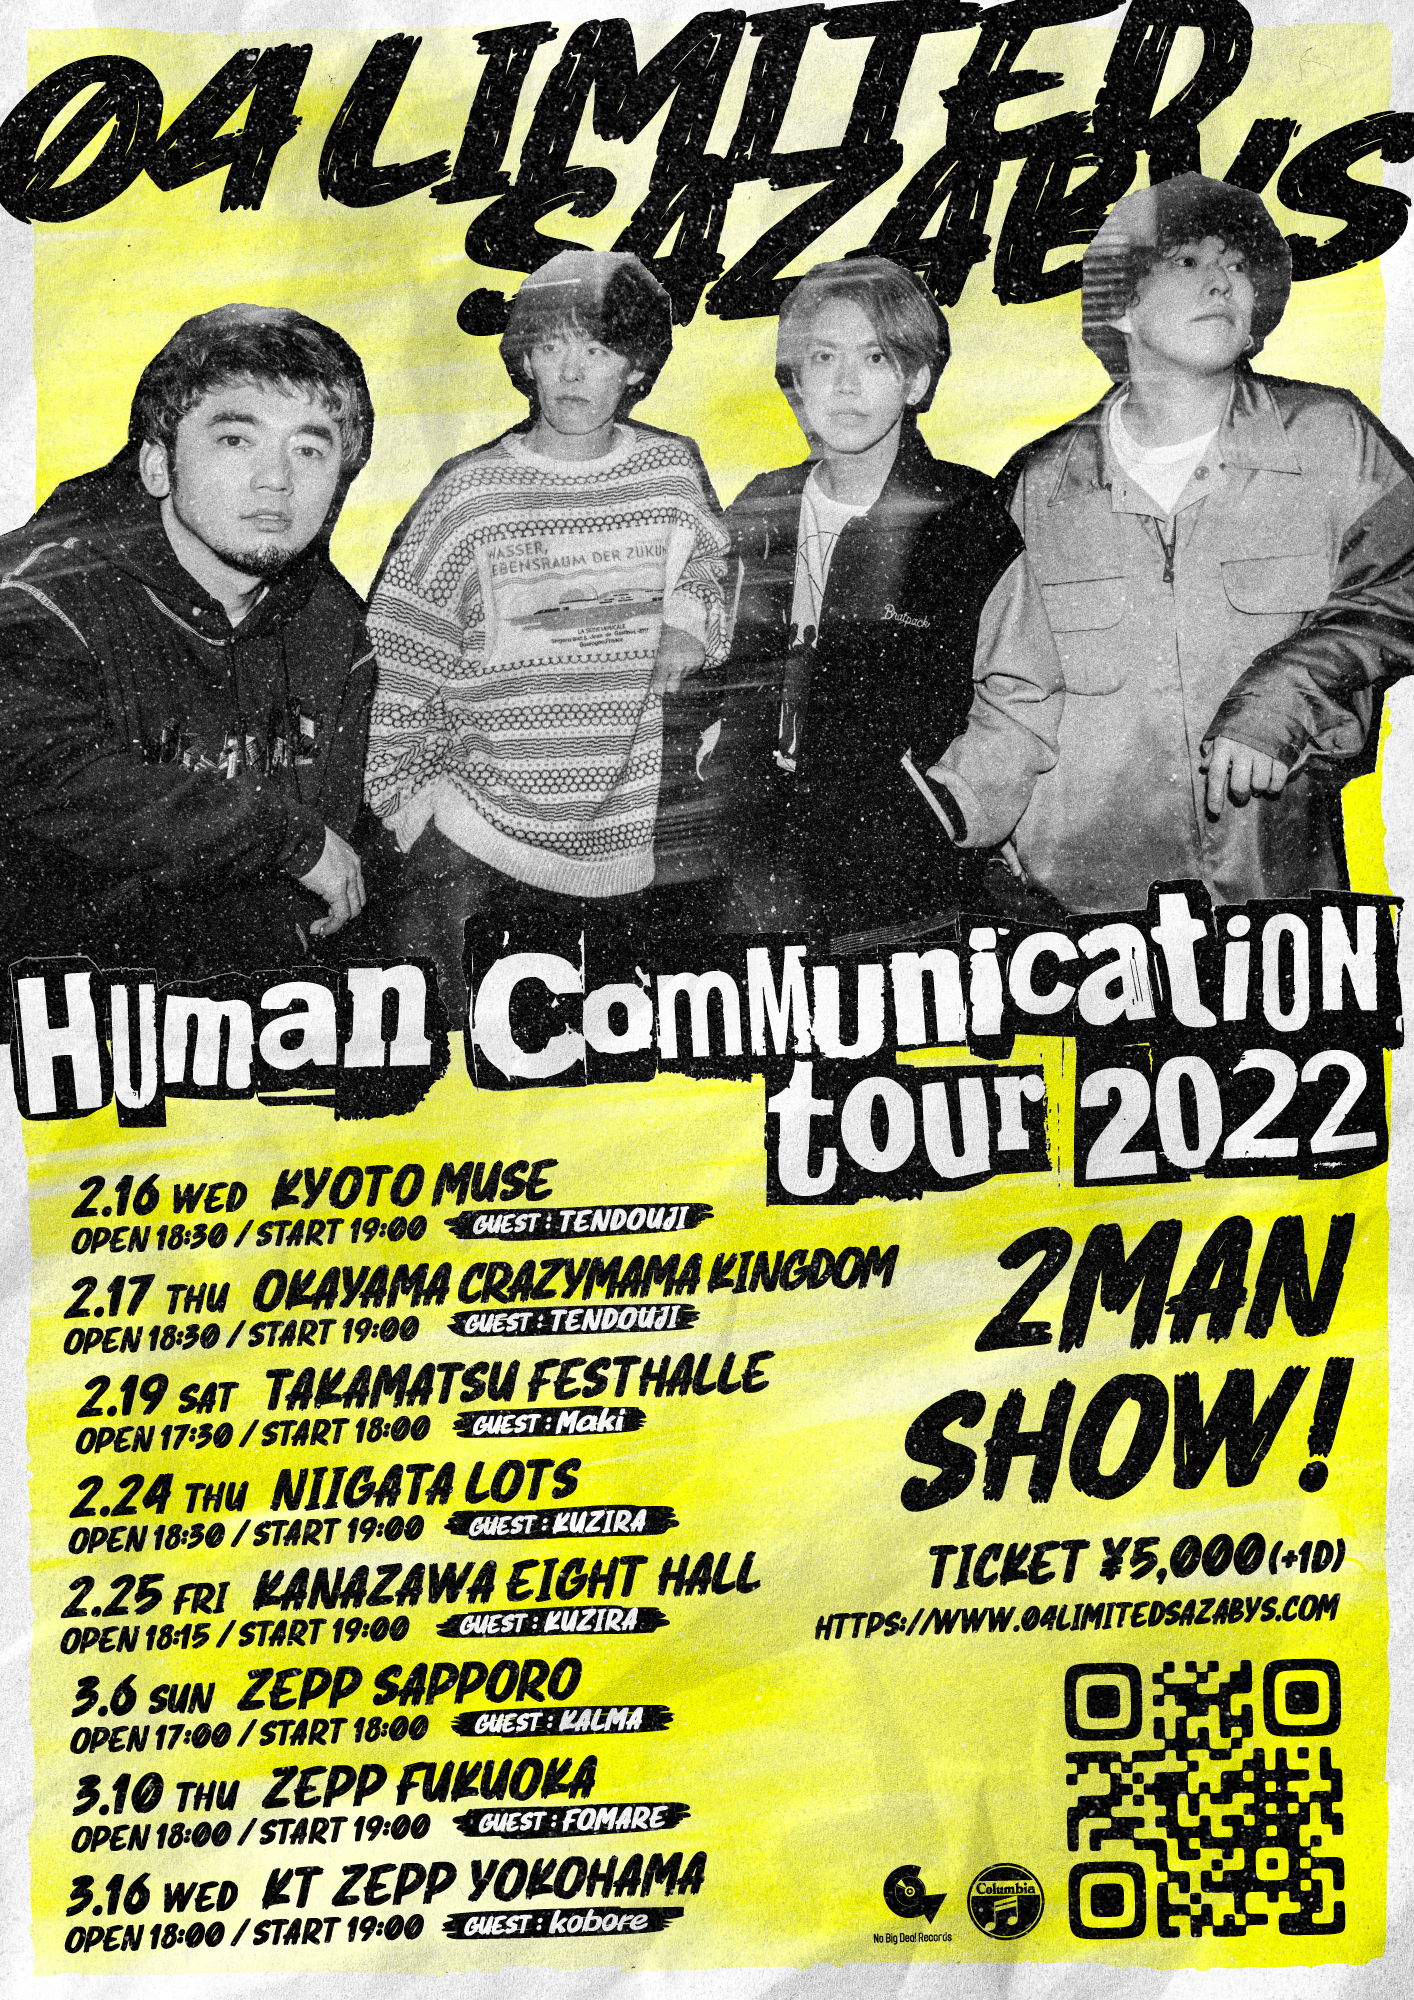 【北海道】Human Communication tour 2022 (Zepp Sapporo)